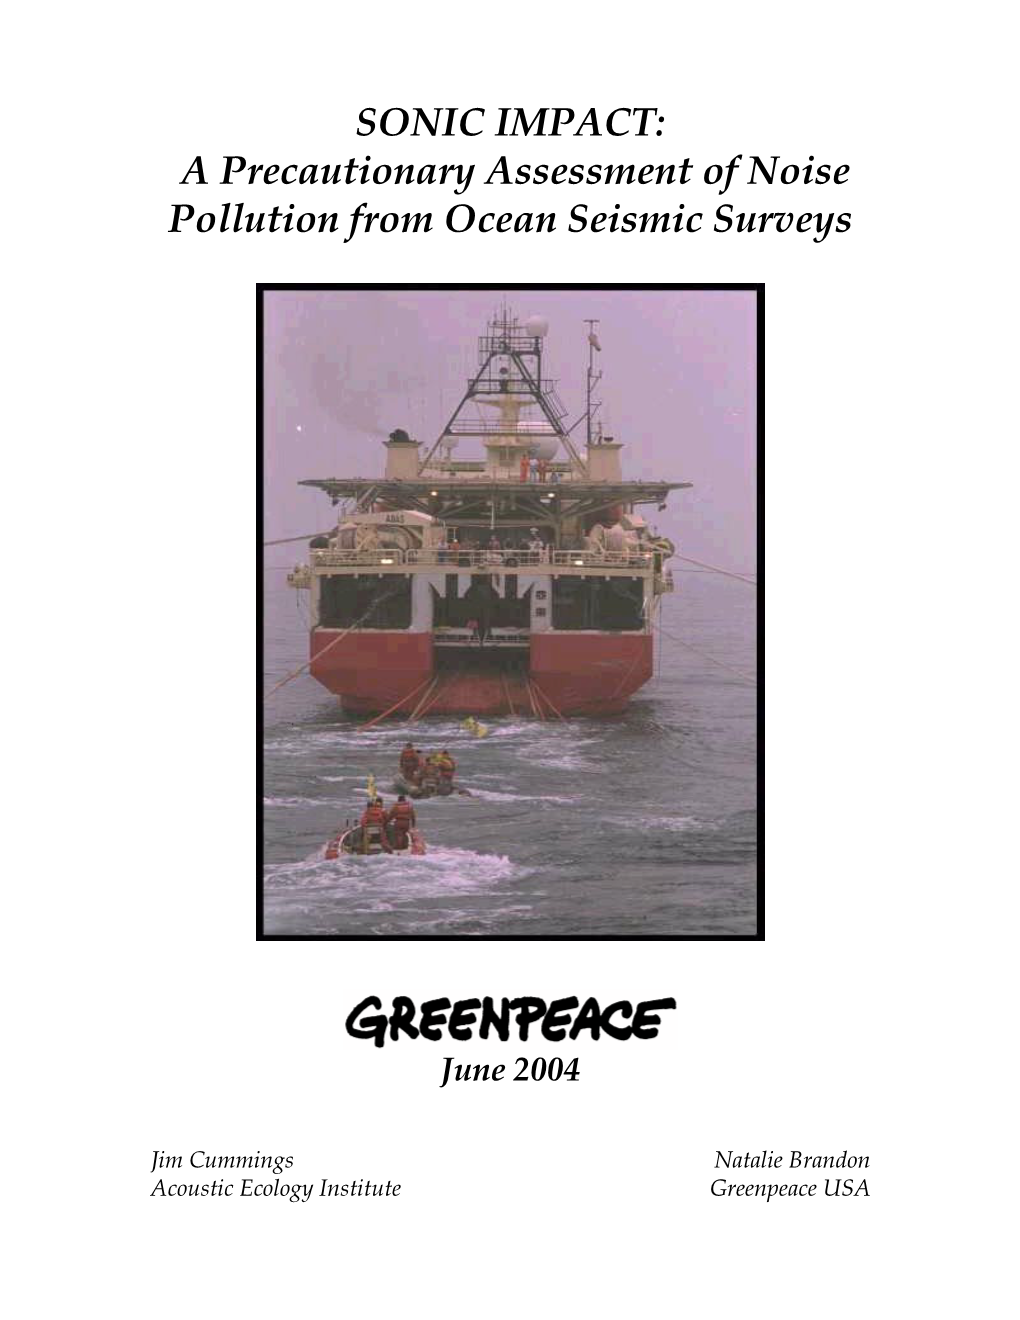 A Precautionary Assessment of Noise Pollution from Ocean Seismic Surveys